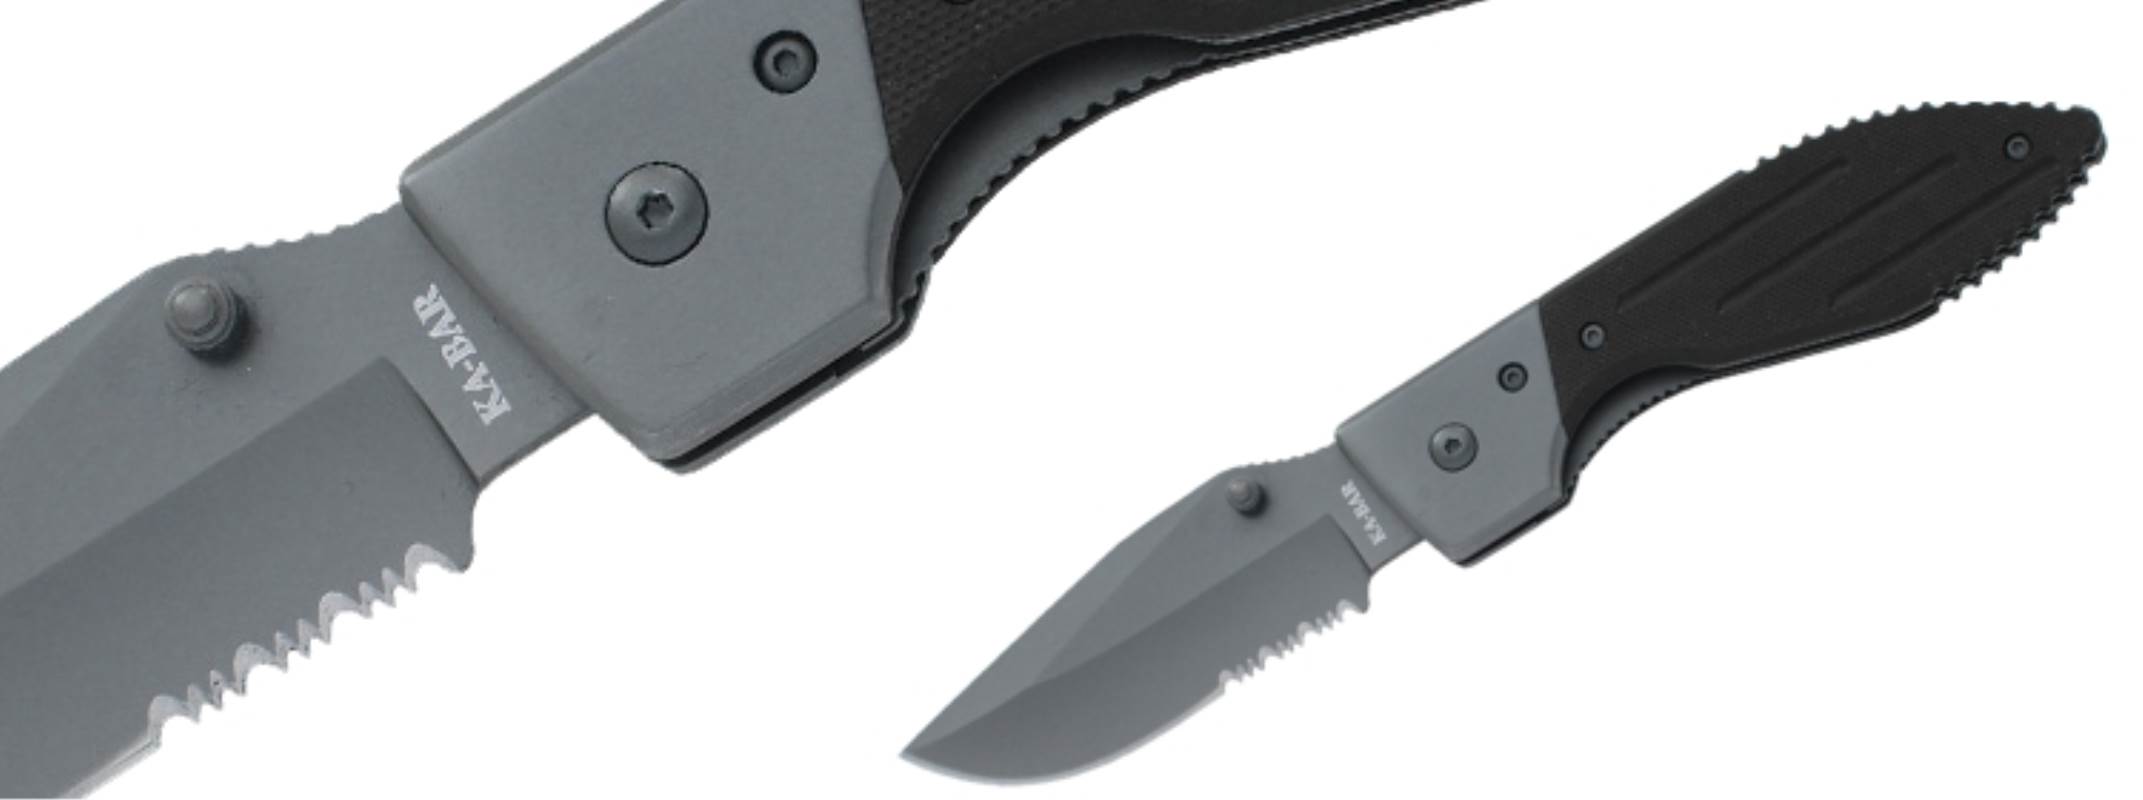 Warthog Serrated Folder Knife